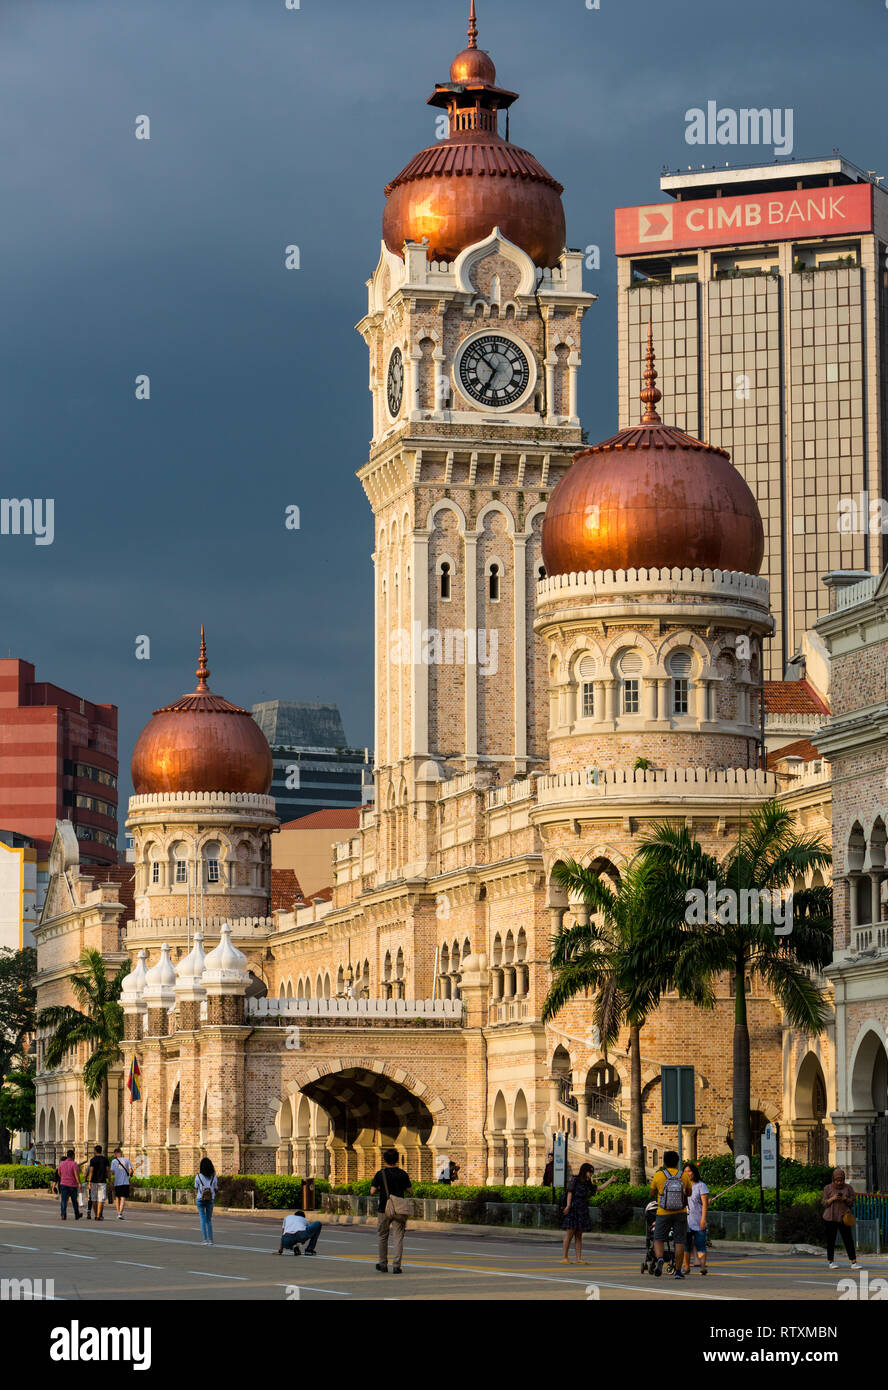 Moorish Architecture. Sultan Abdul Samad Building, former seat of British Colonial Administration. Kuala Lumpur, Malaysia. Stock Photo